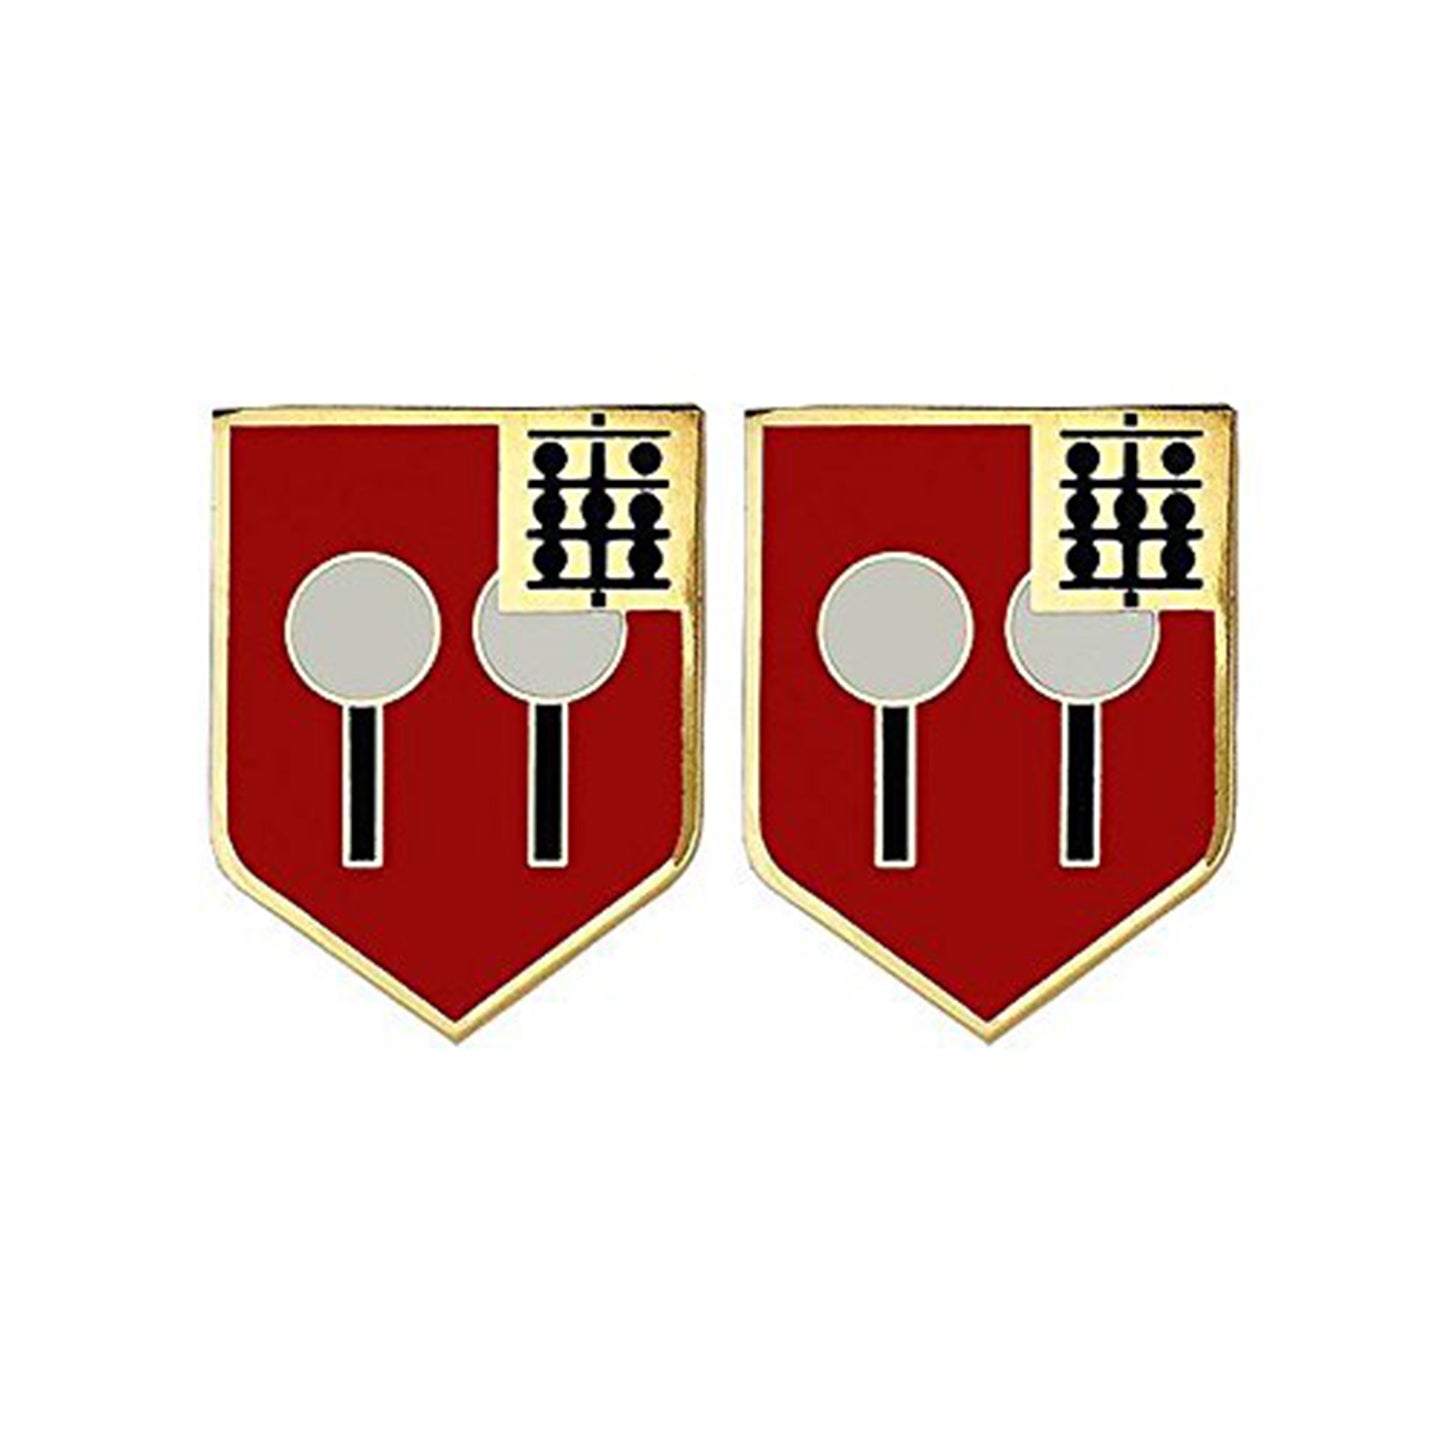 US Army 9th Field Artillery Regiment Unit Crest (Pair)